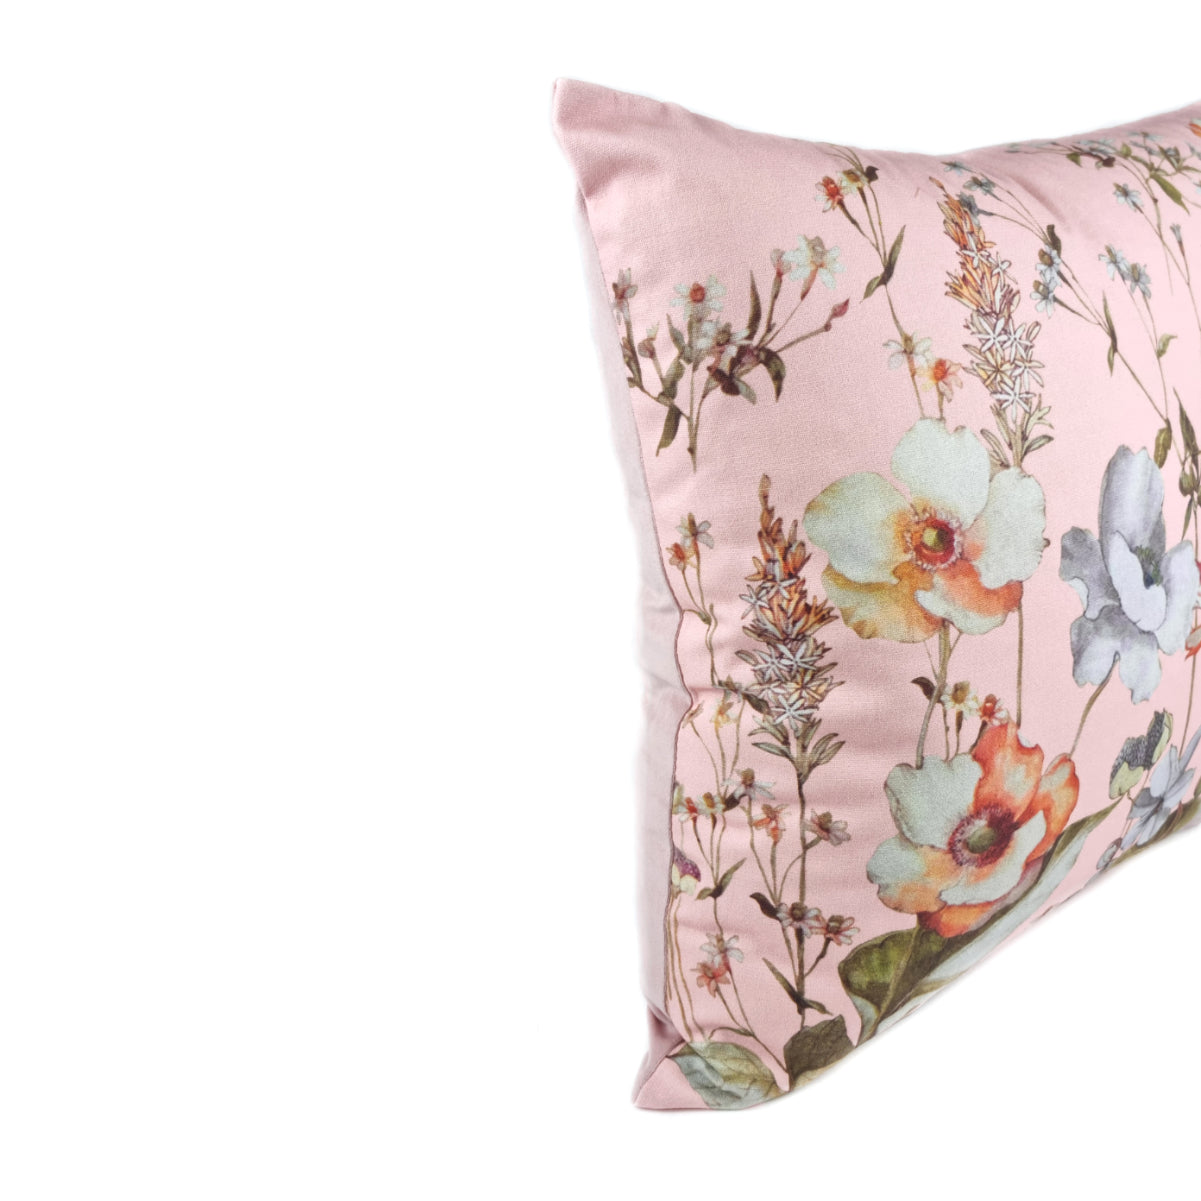 Cushion FJURI 45x45 Flowers with Peach Pink background